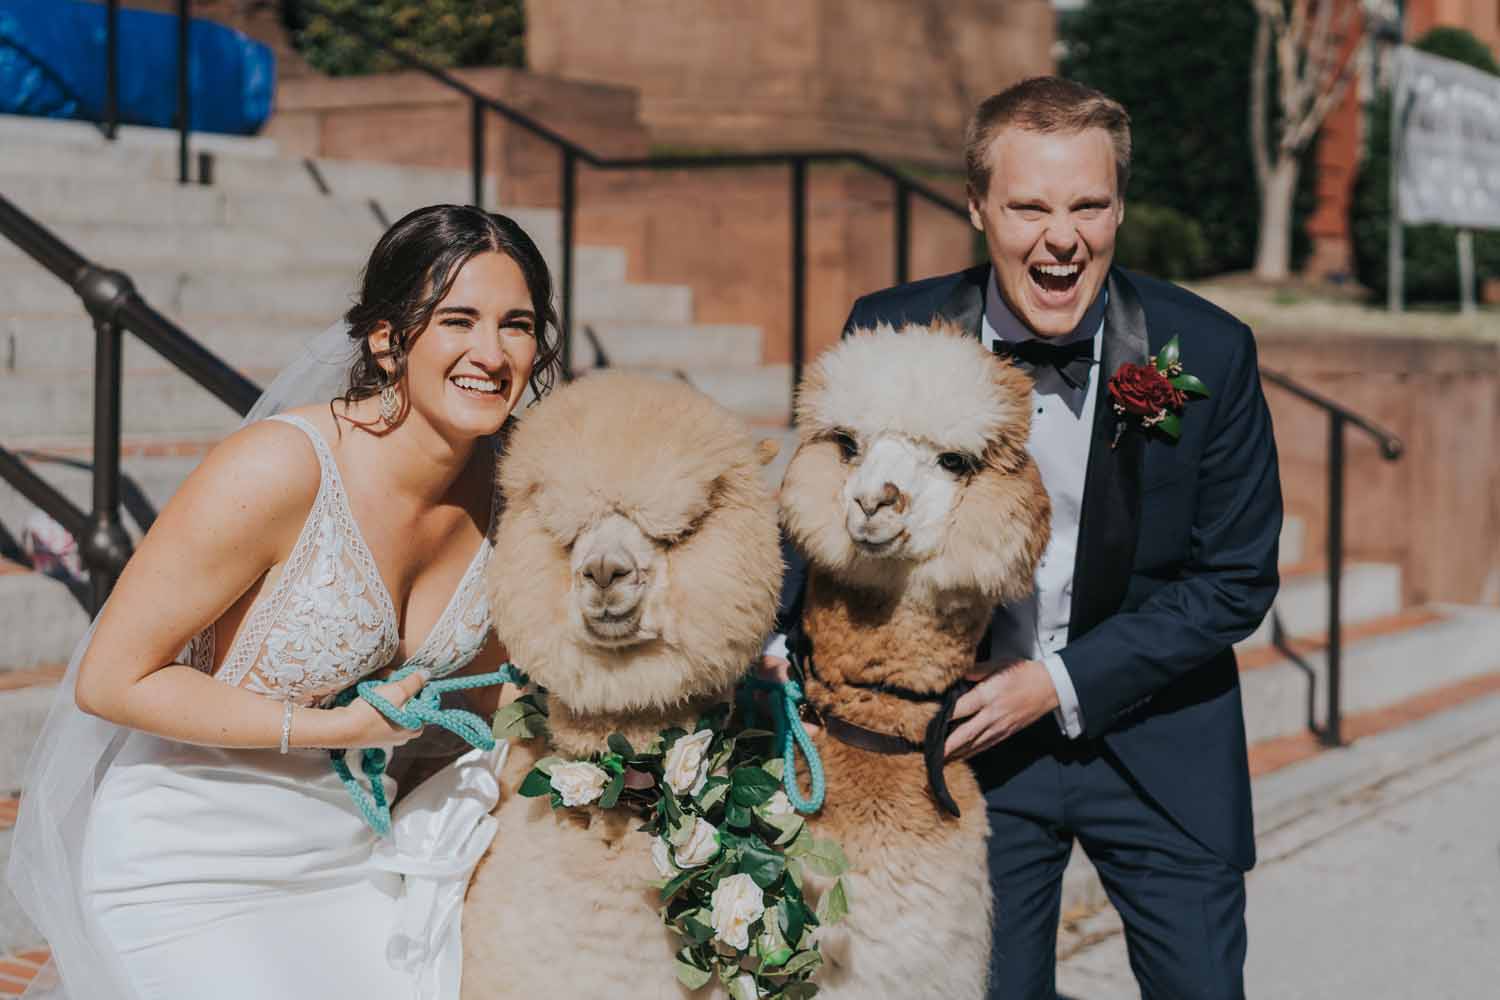 DAR DC Winter Wedding - alpacas